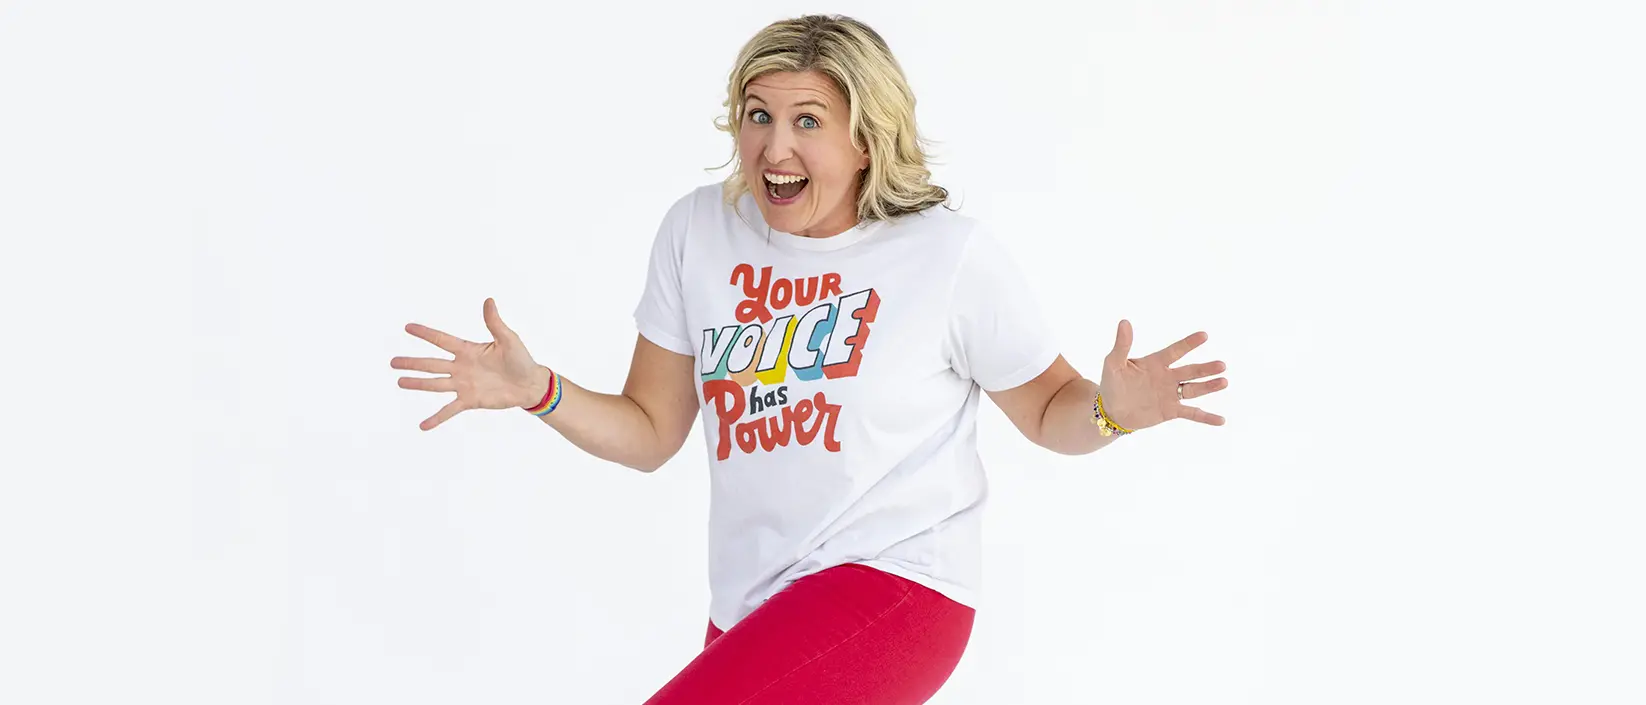 Katie Silcott dances in t-shirt that reads "Your voice has power."